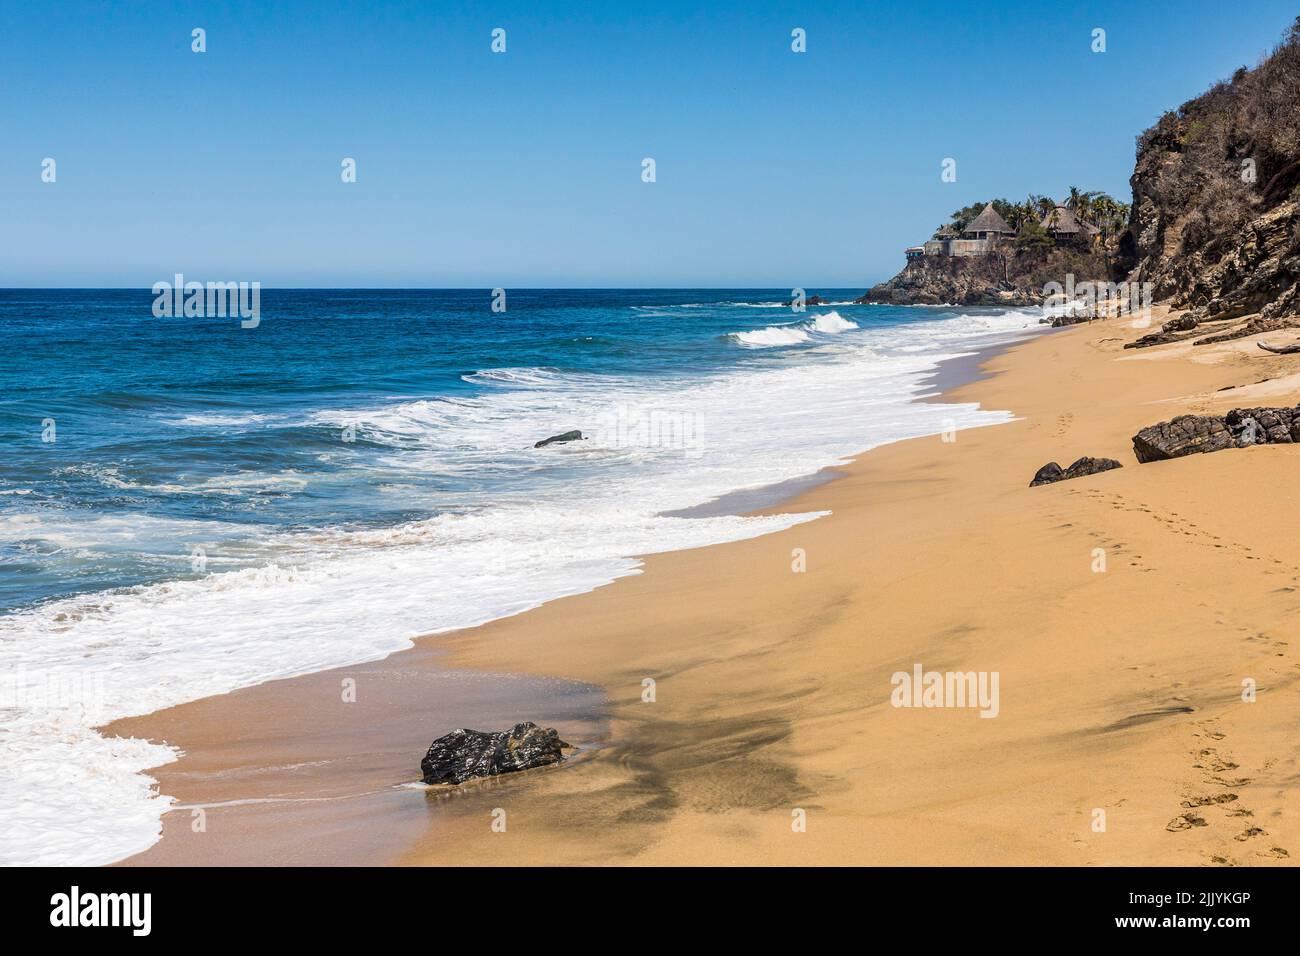 Beach and waves. Playa Malpaso near Sayulita, Nayarit, Mexico. Stock Photo